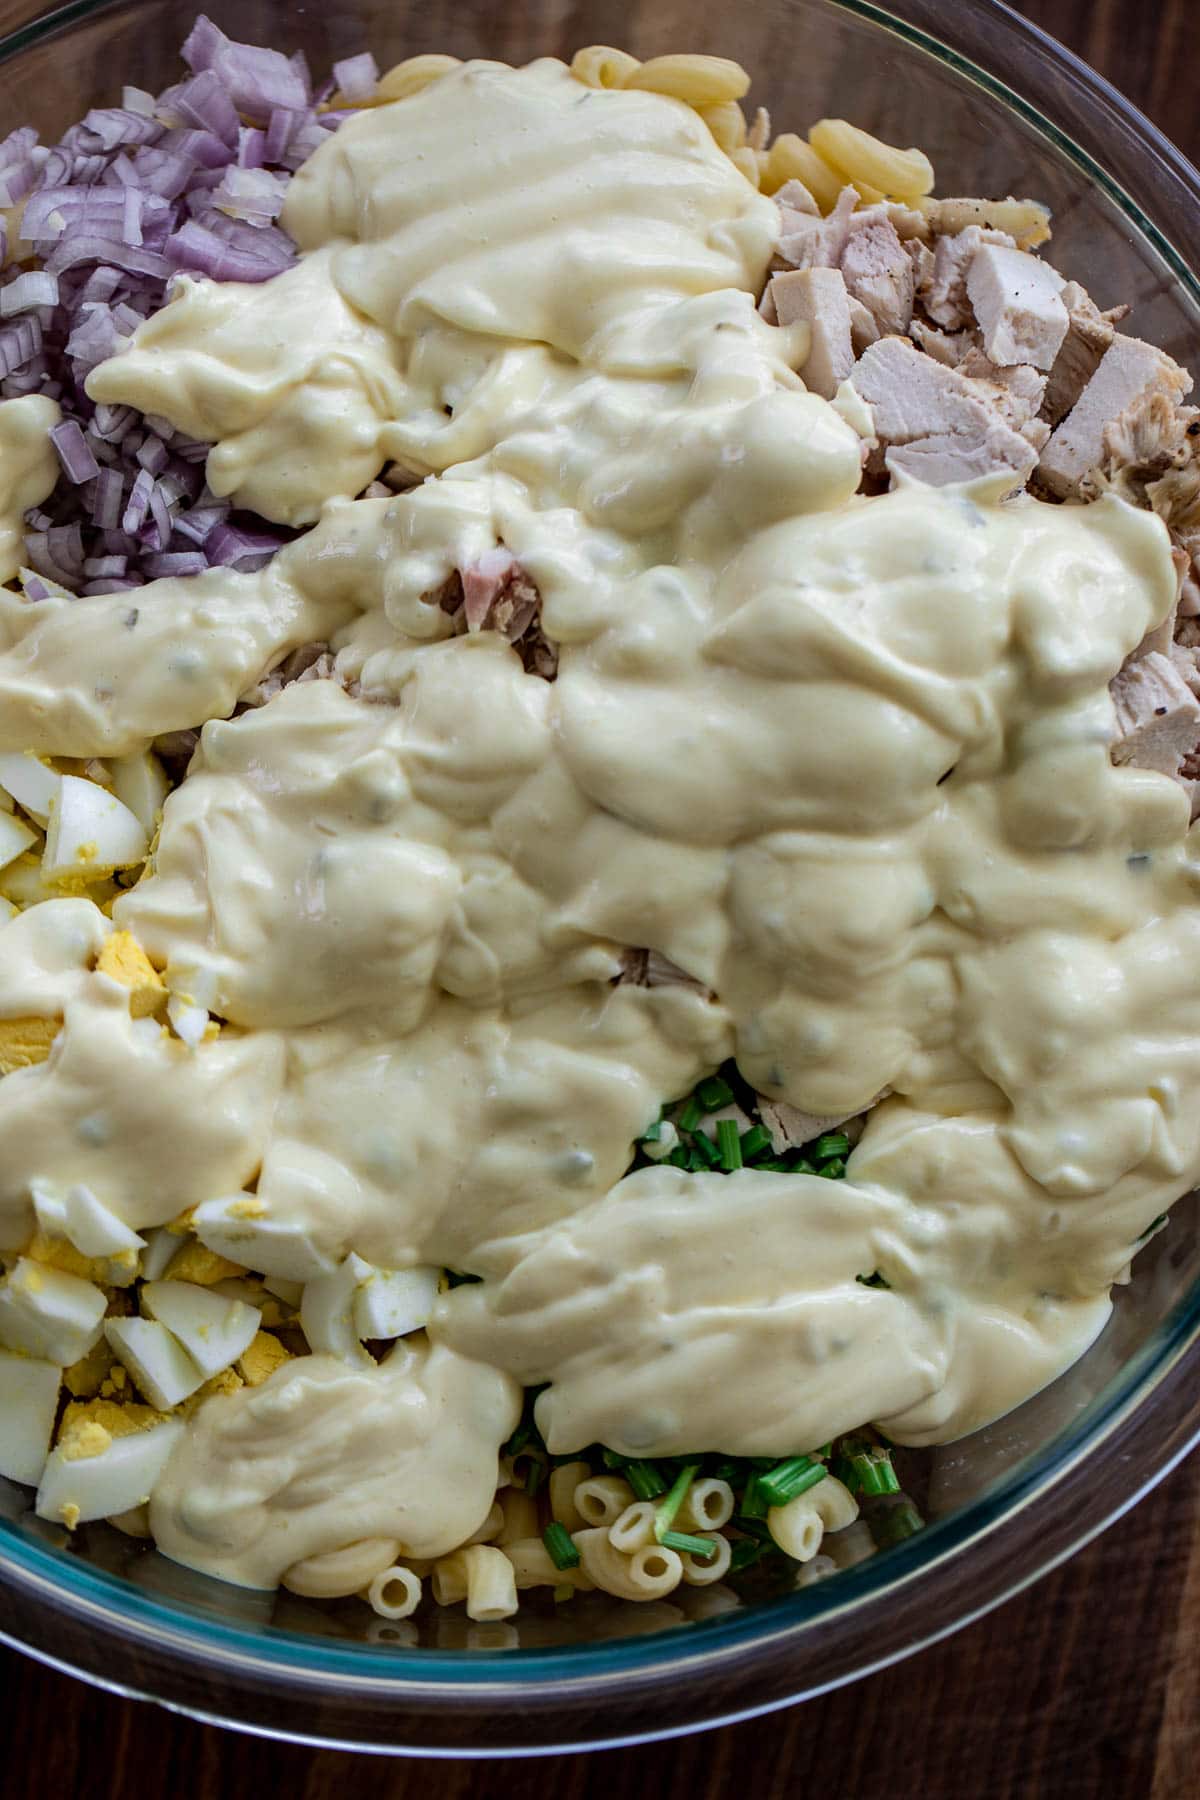 Creamy dressing over salad ingredients